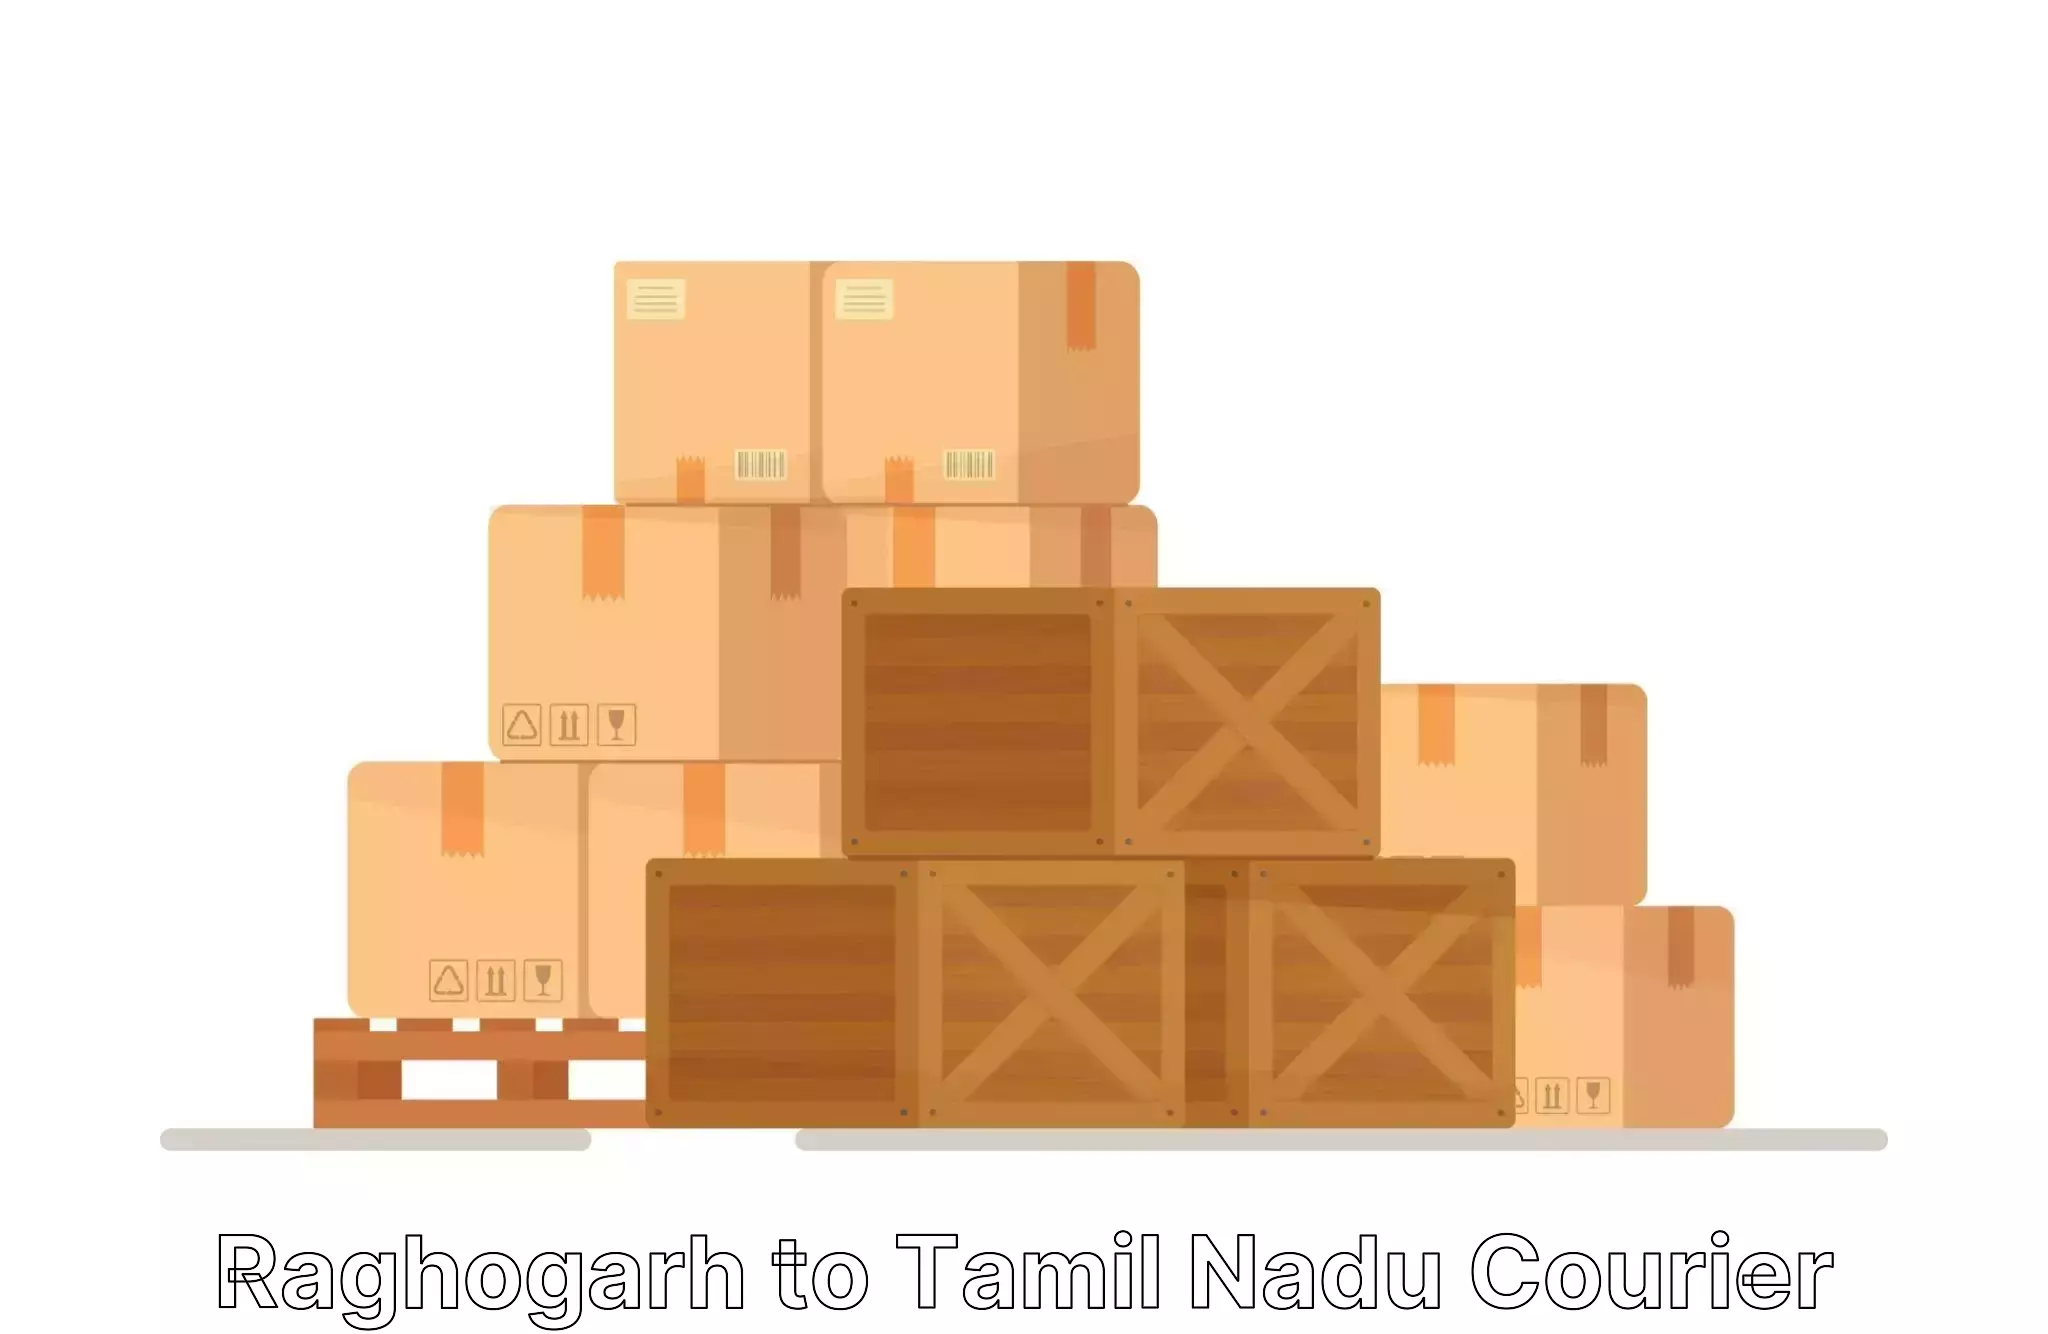 Home moving specialists Raghogarh to Narikkudi